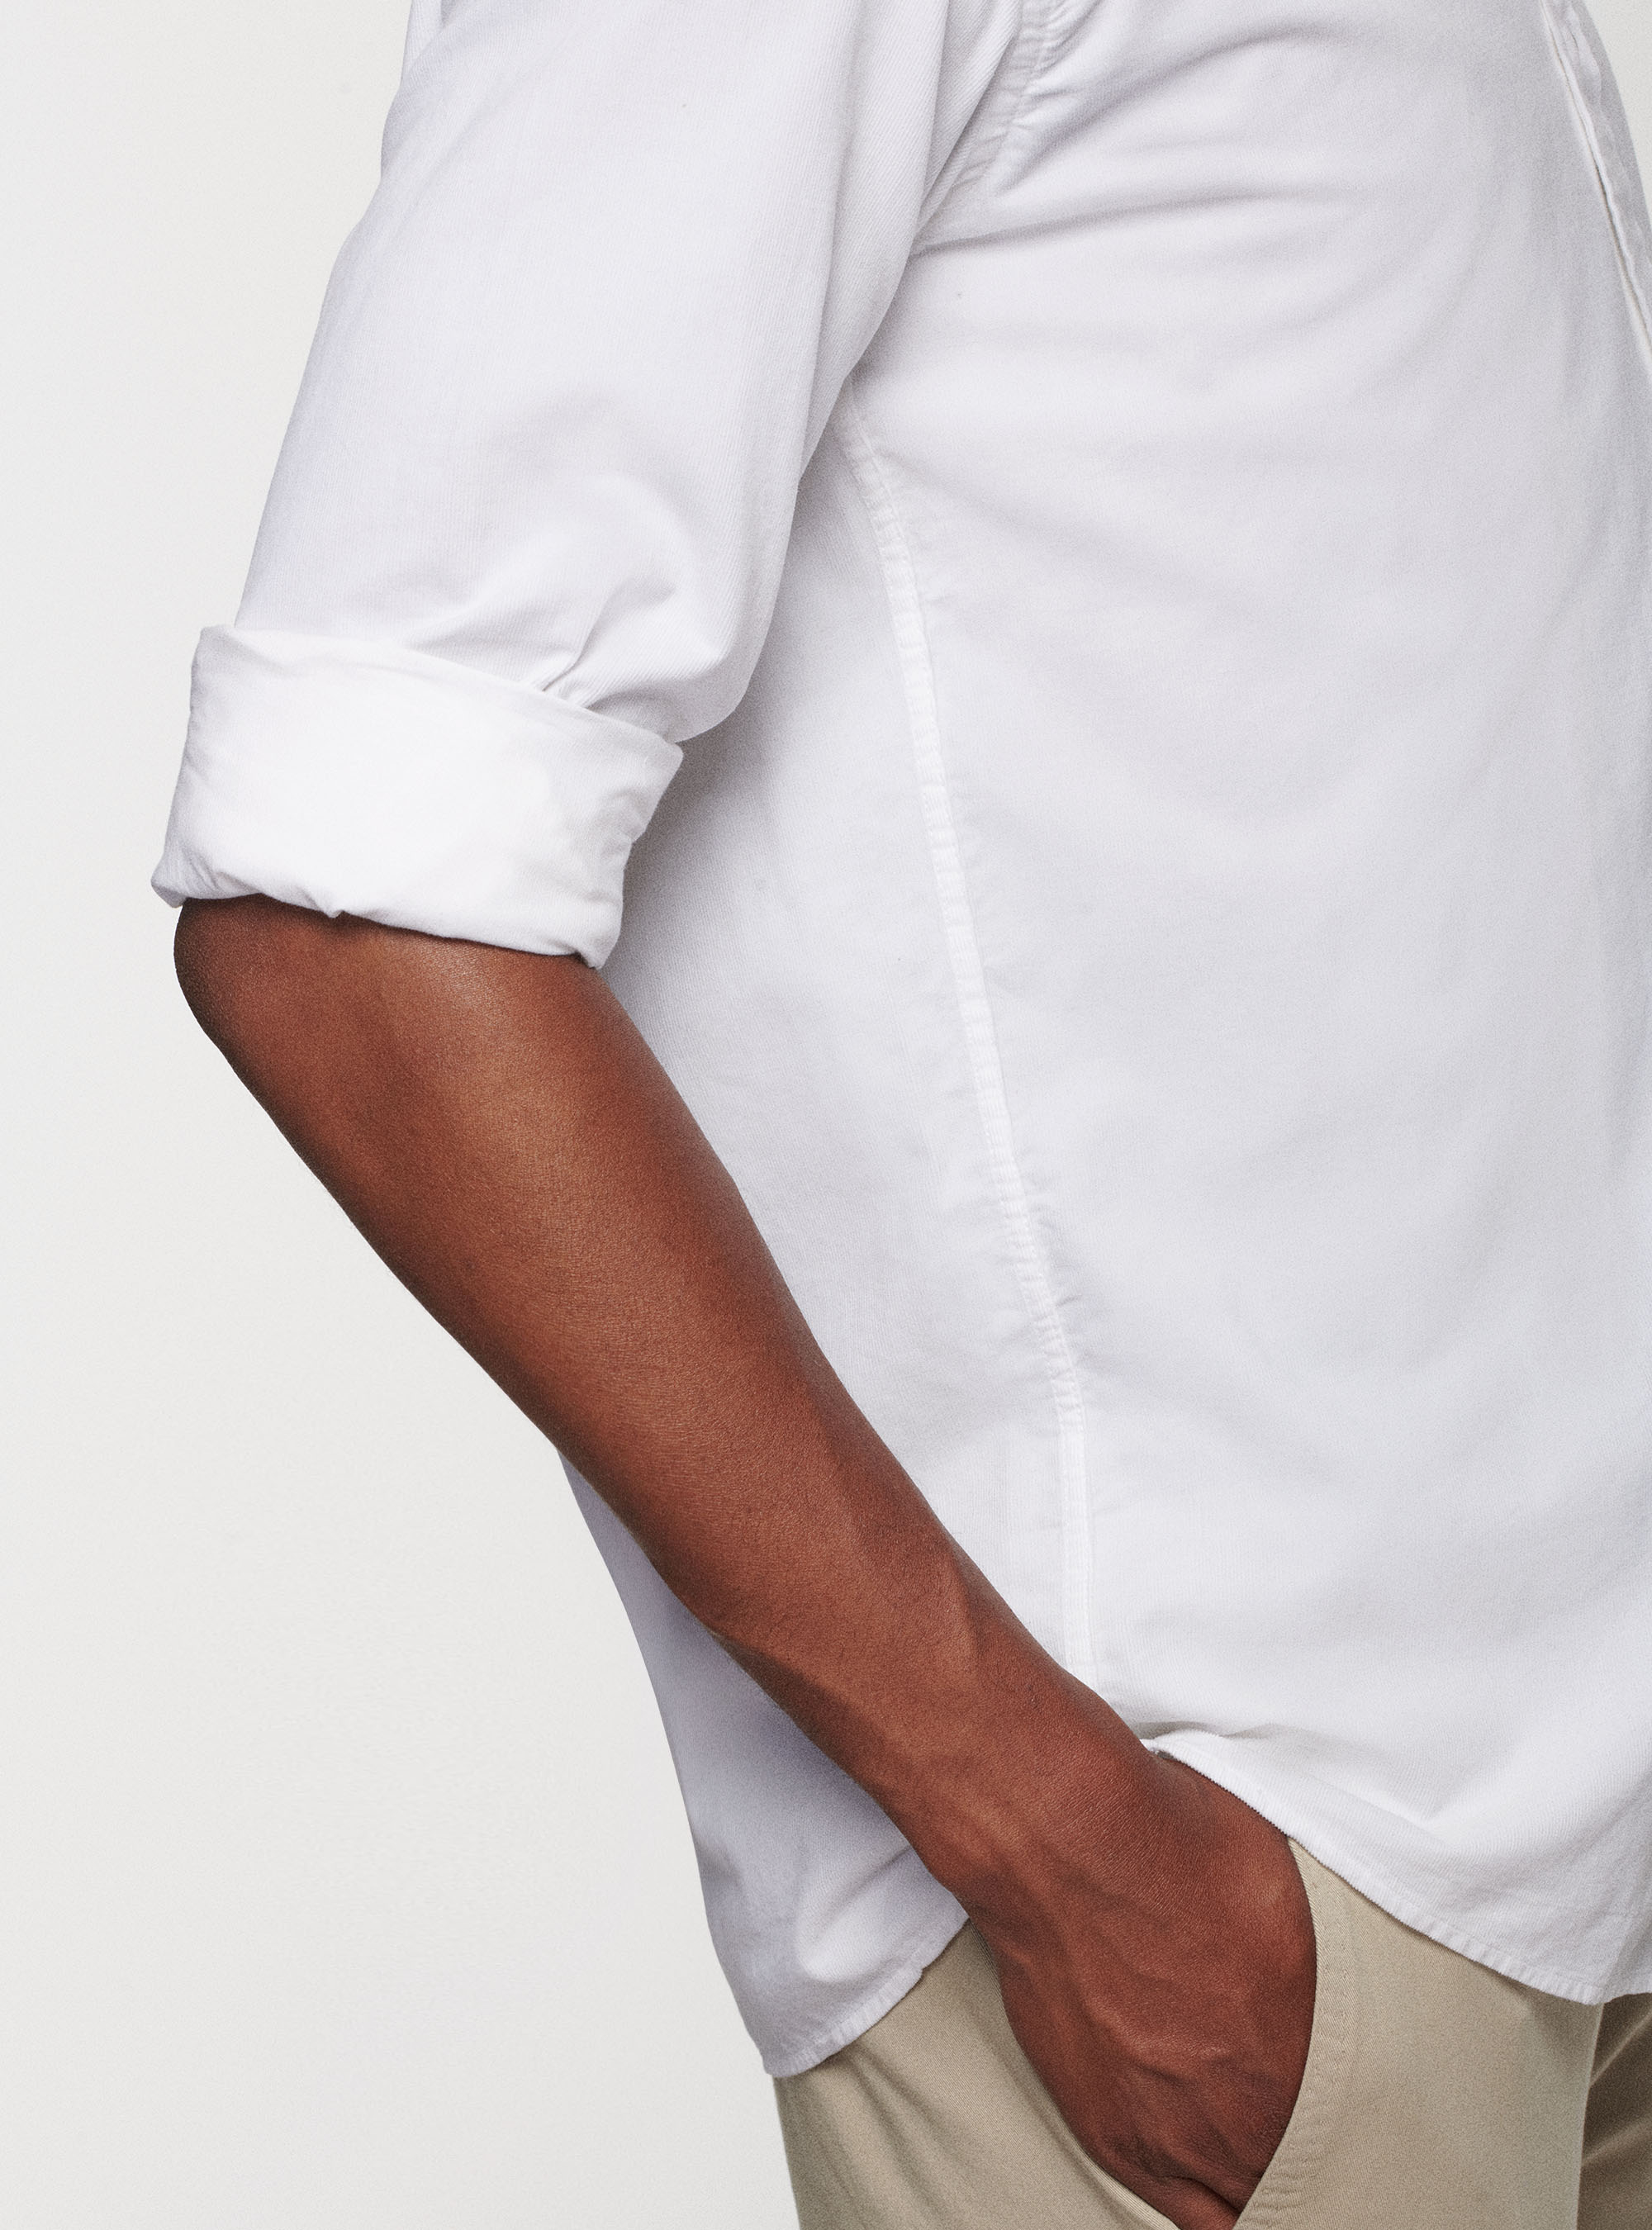 Camicia in velluto a costine | Gutteridge | catalog-gutteridge-storefront  Uomo